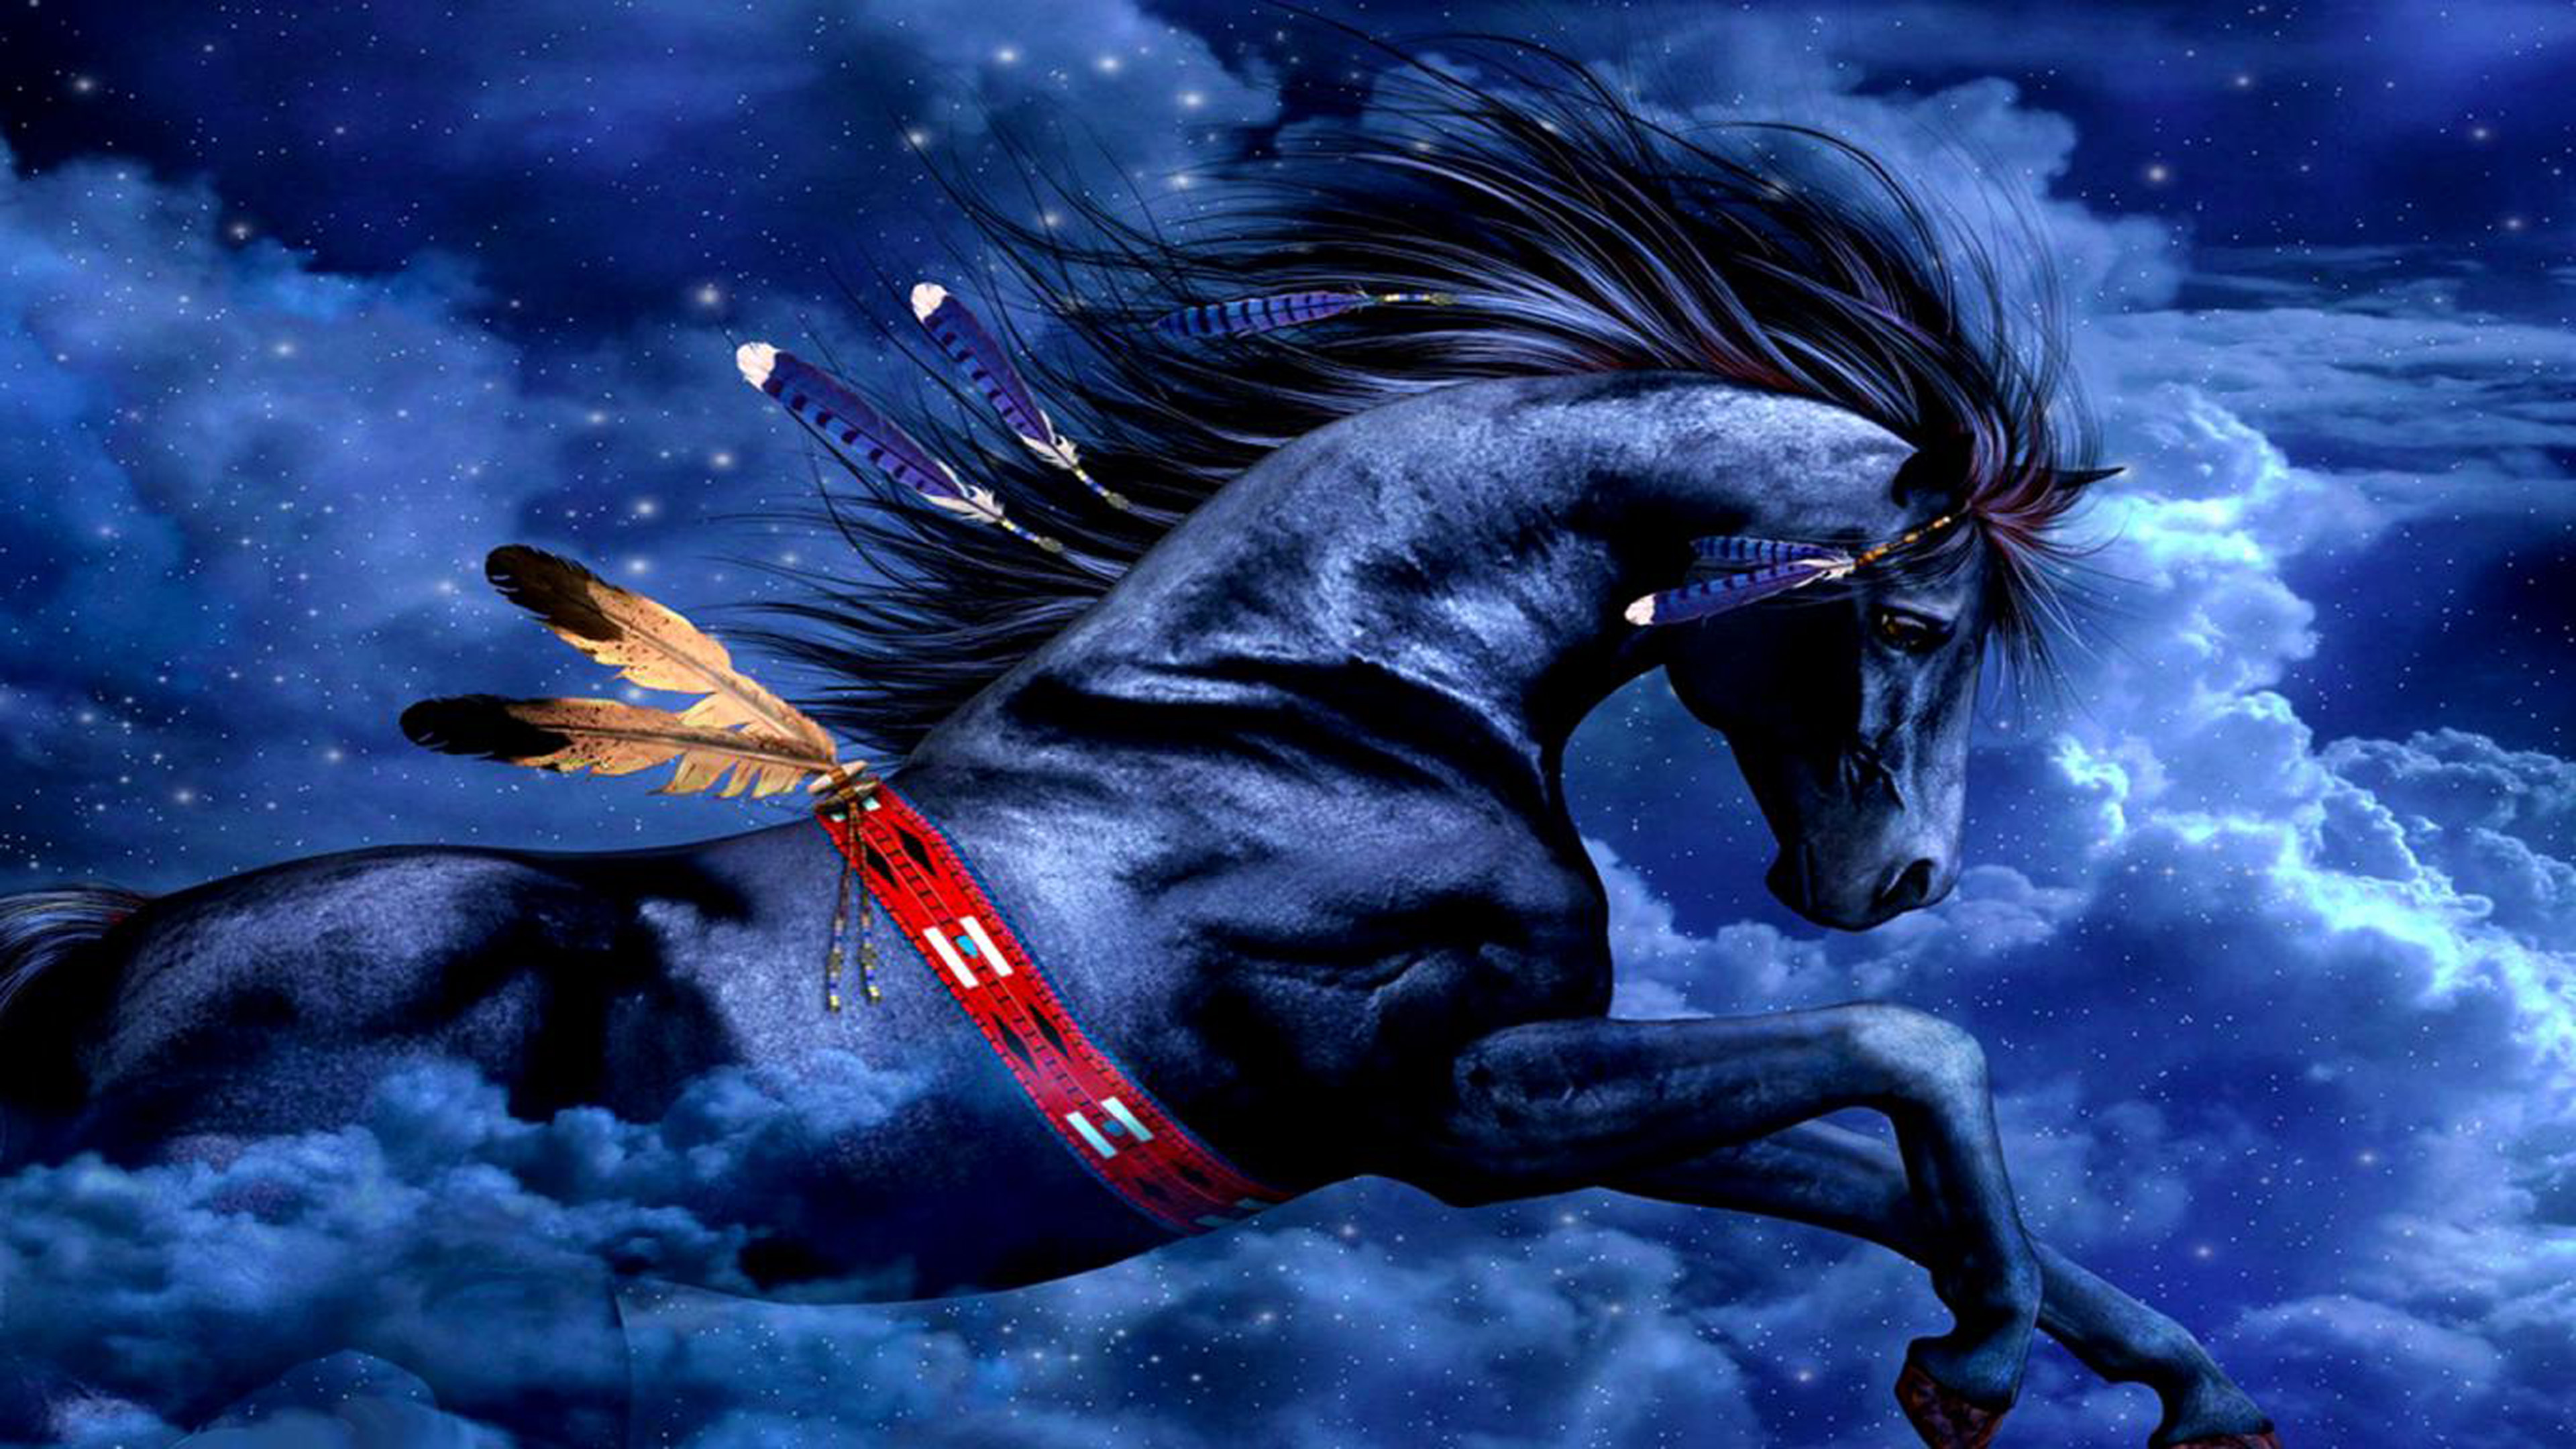 Fantasy Digital Art Blue Indian Horse Wallpaper Design : Wallpapers13.com